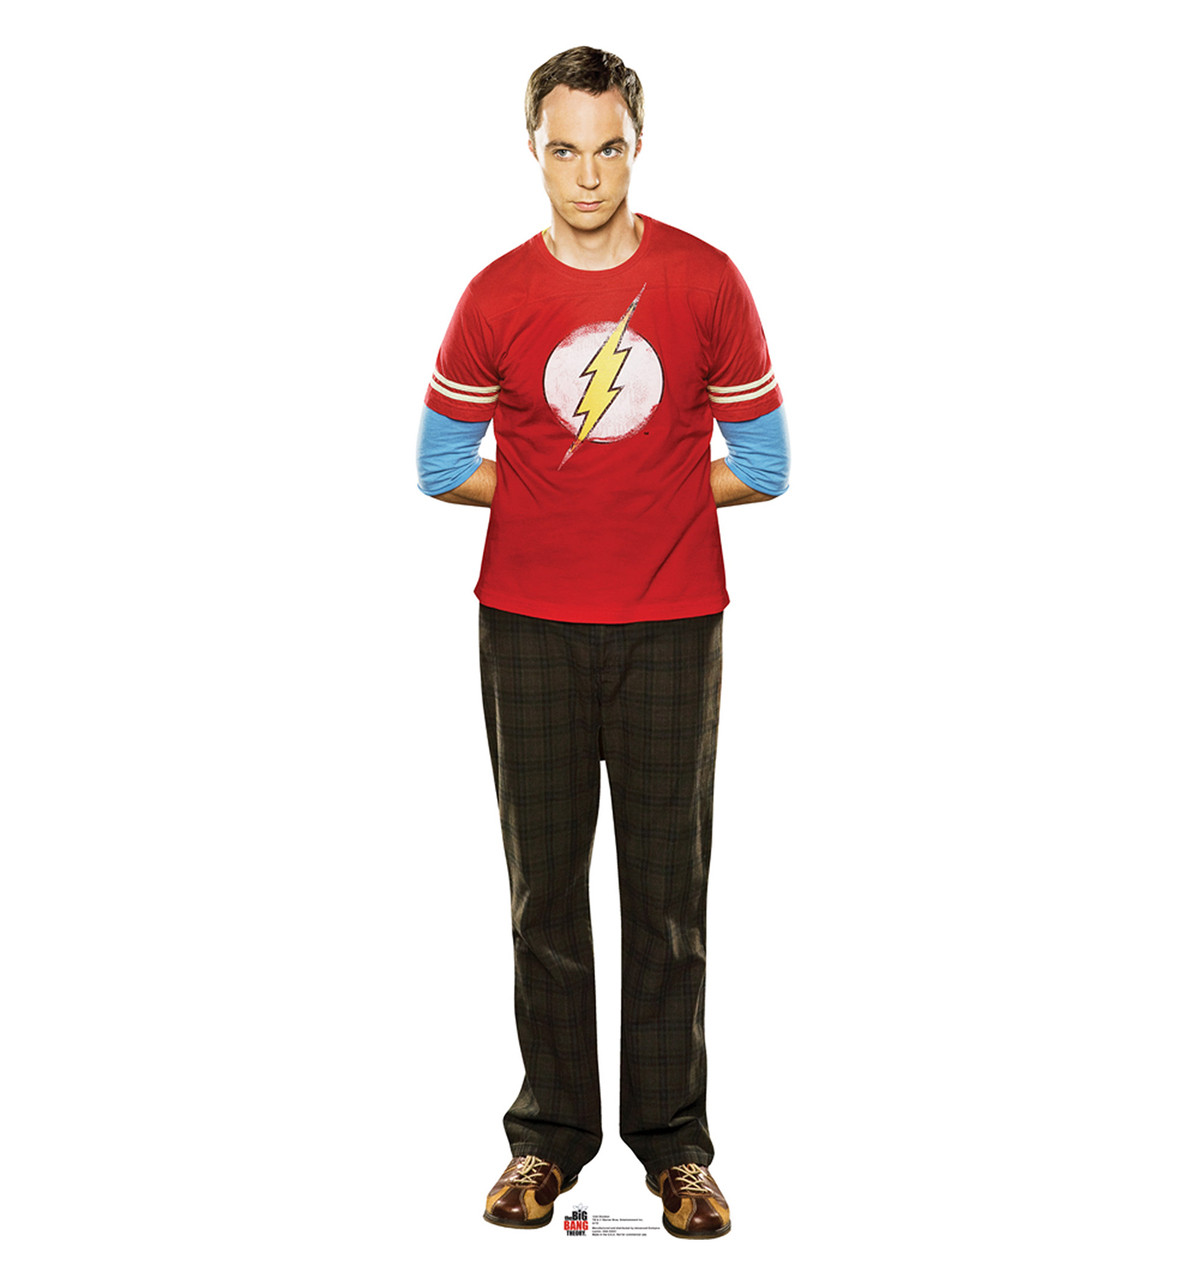 Life-size Sheldon - Big Bang Theory 1 Cardboard Standup |Cardboard Cutout